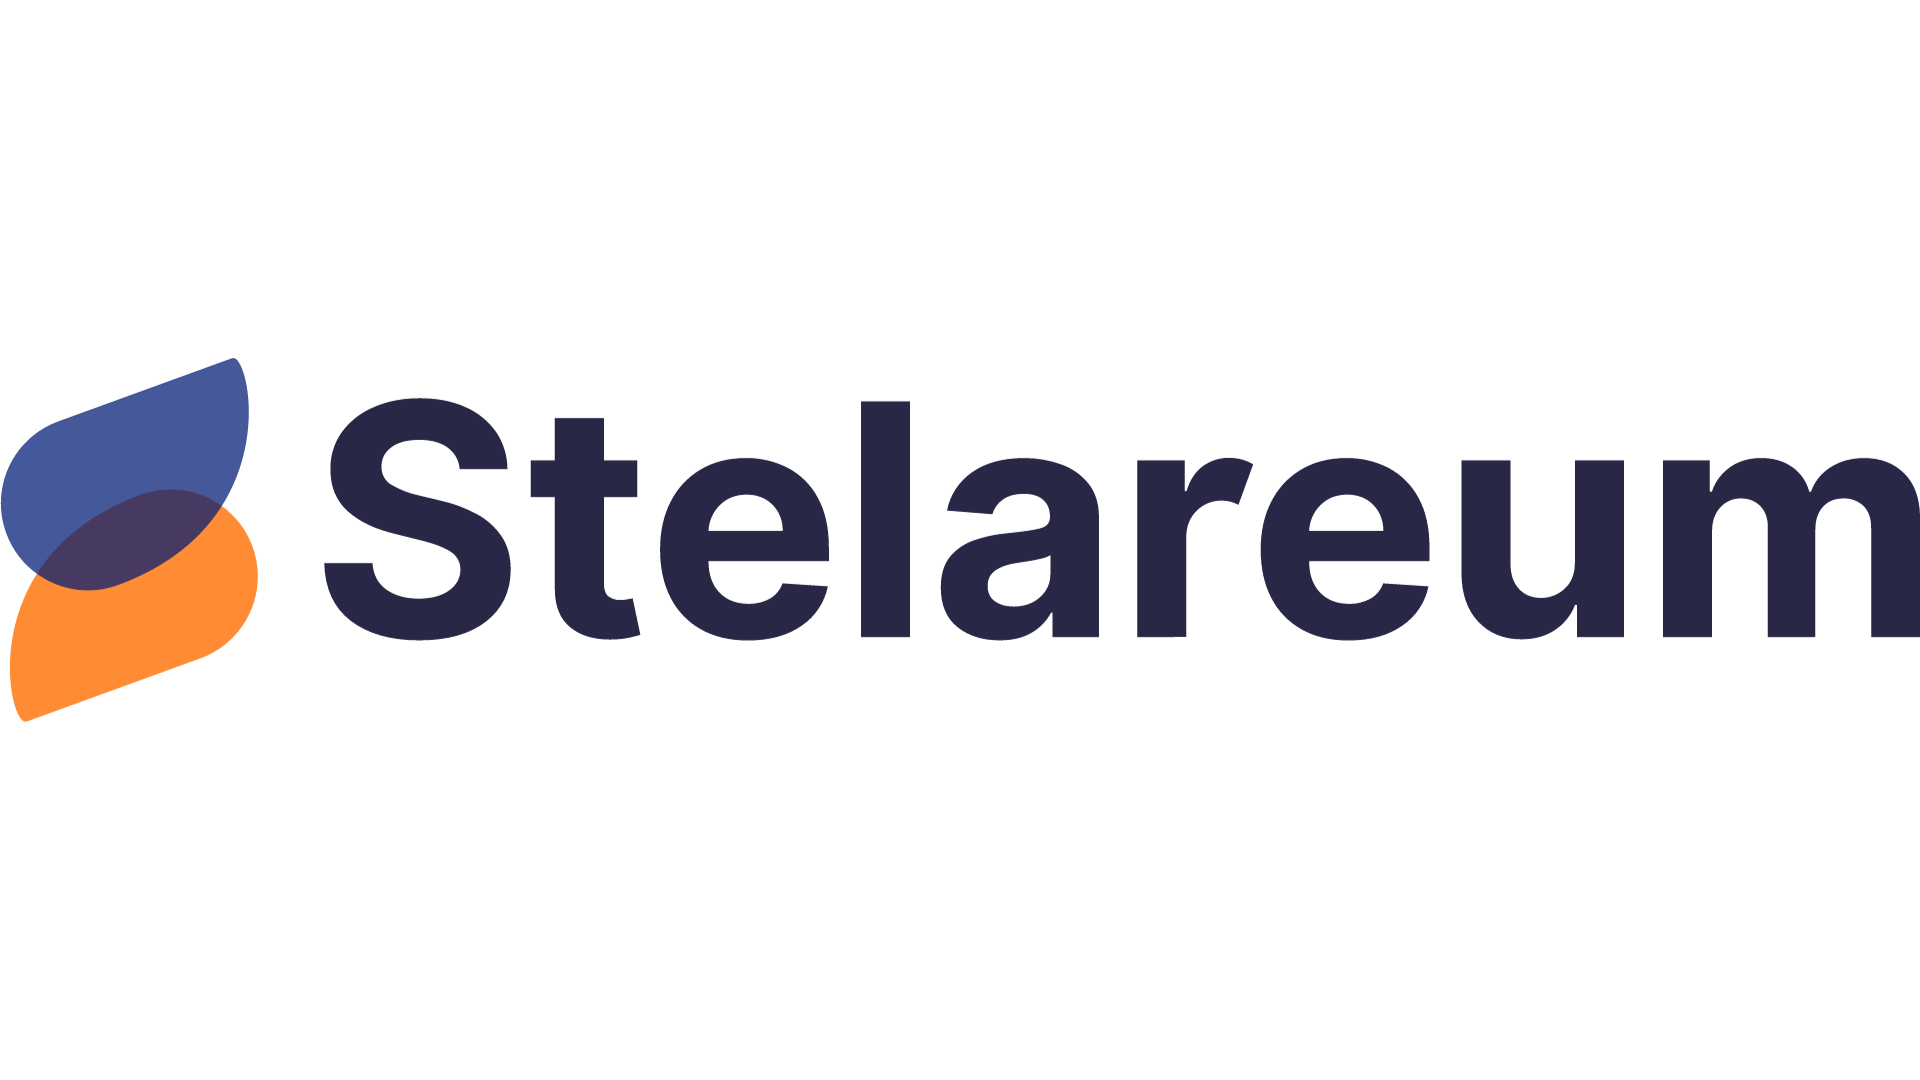 stelareum logo black